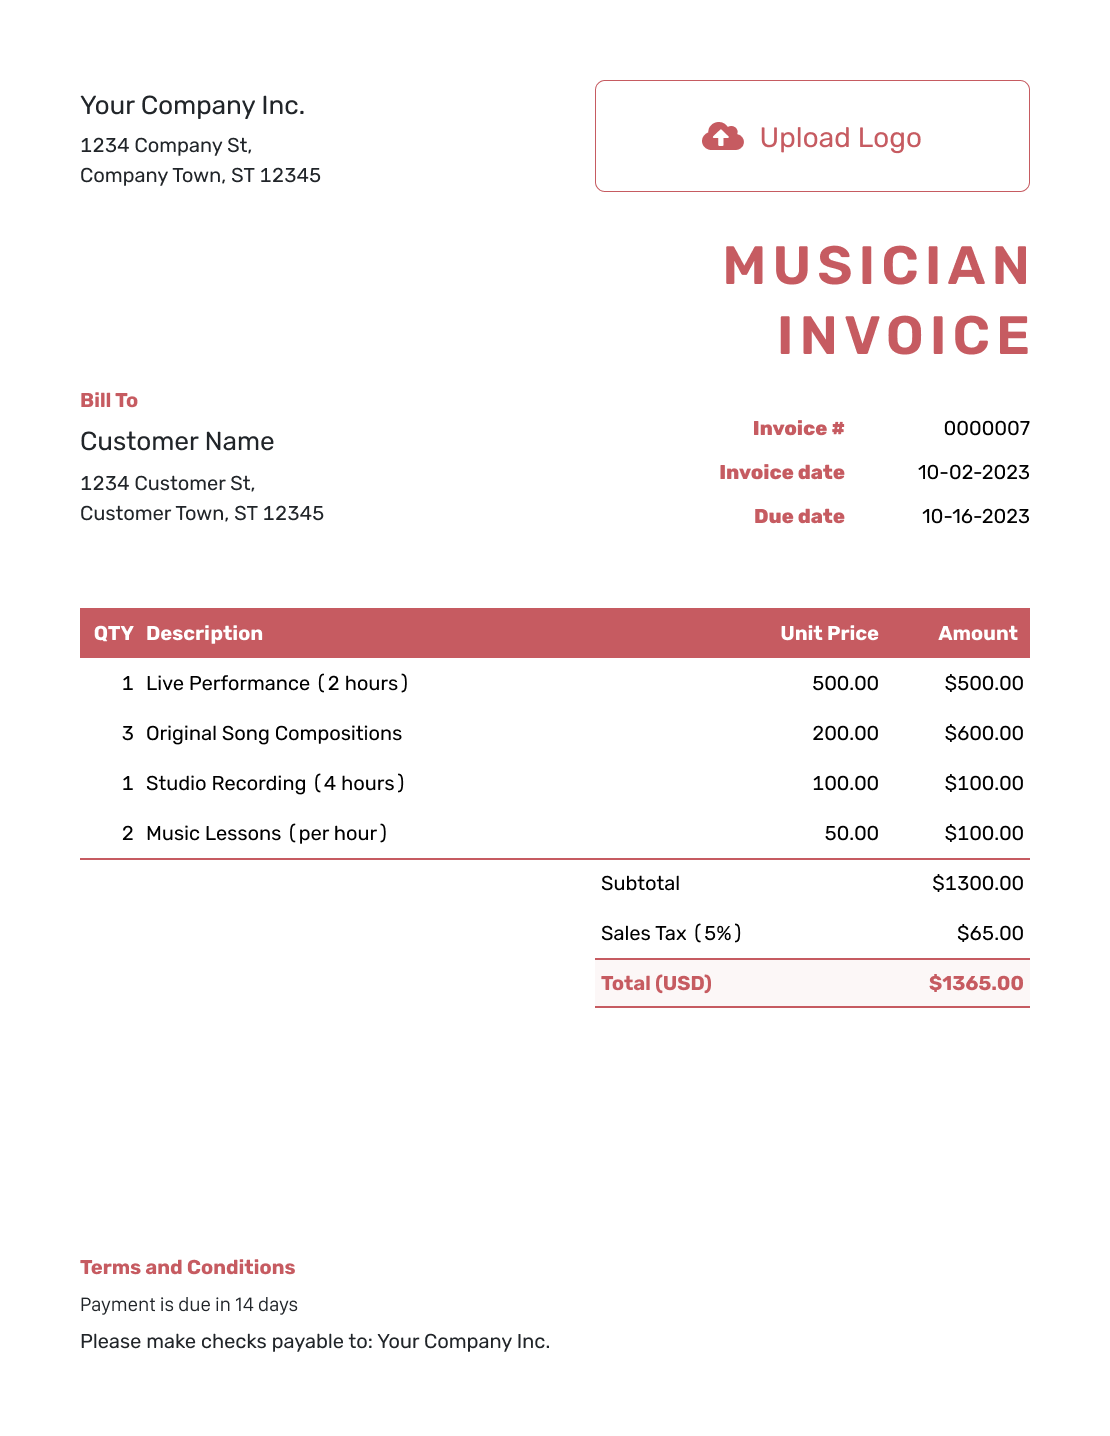 Itemized Musician Invoice Template